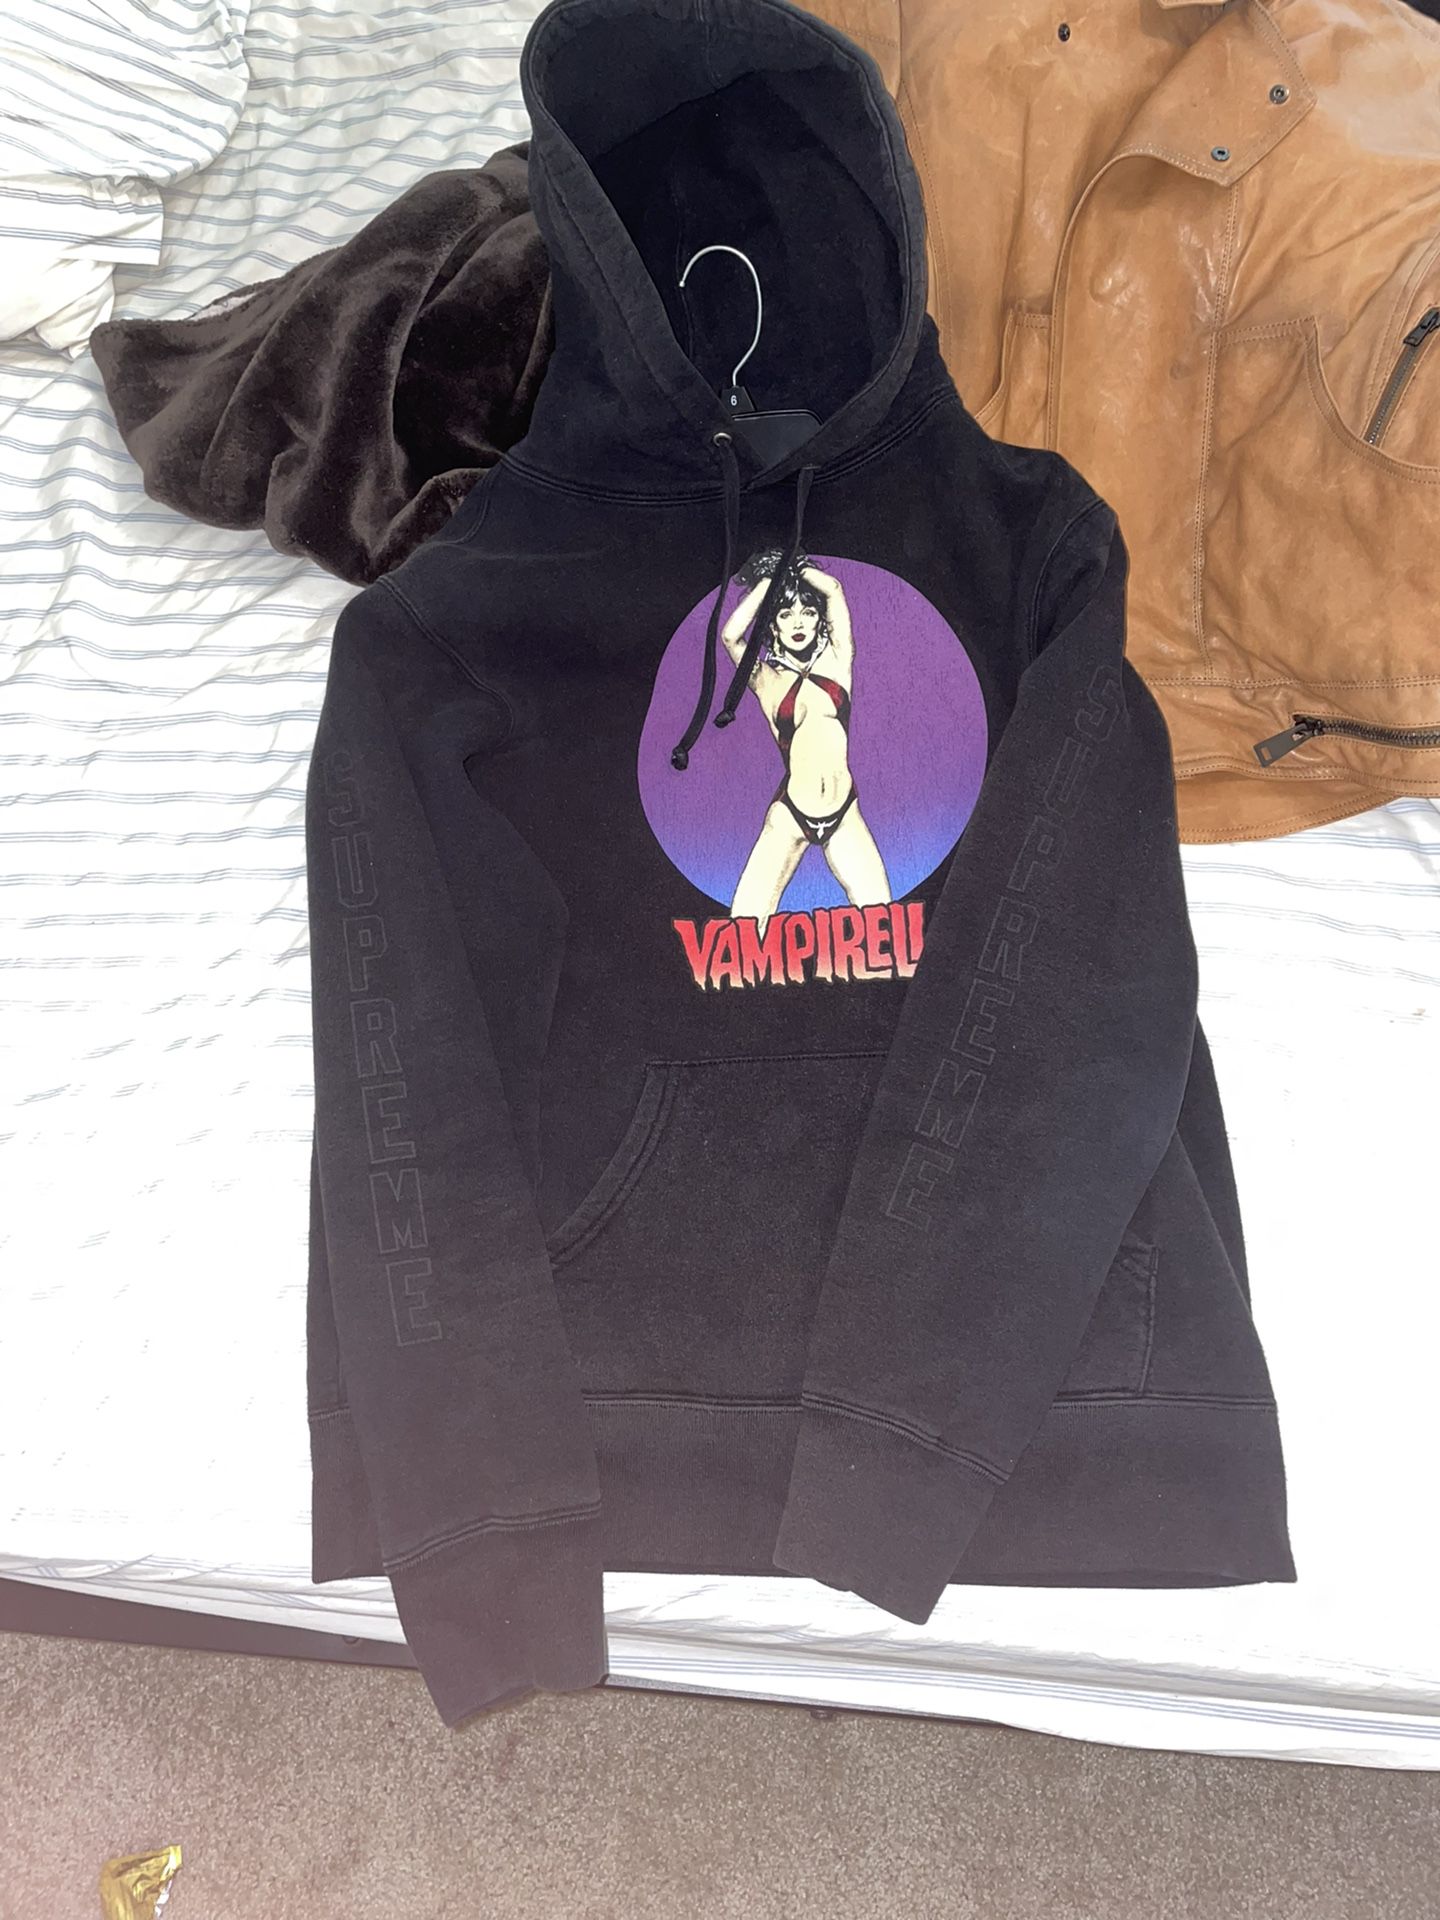 Supreme Vampirella Hoodie for Sale in Jacksonville, FL - OfferUp